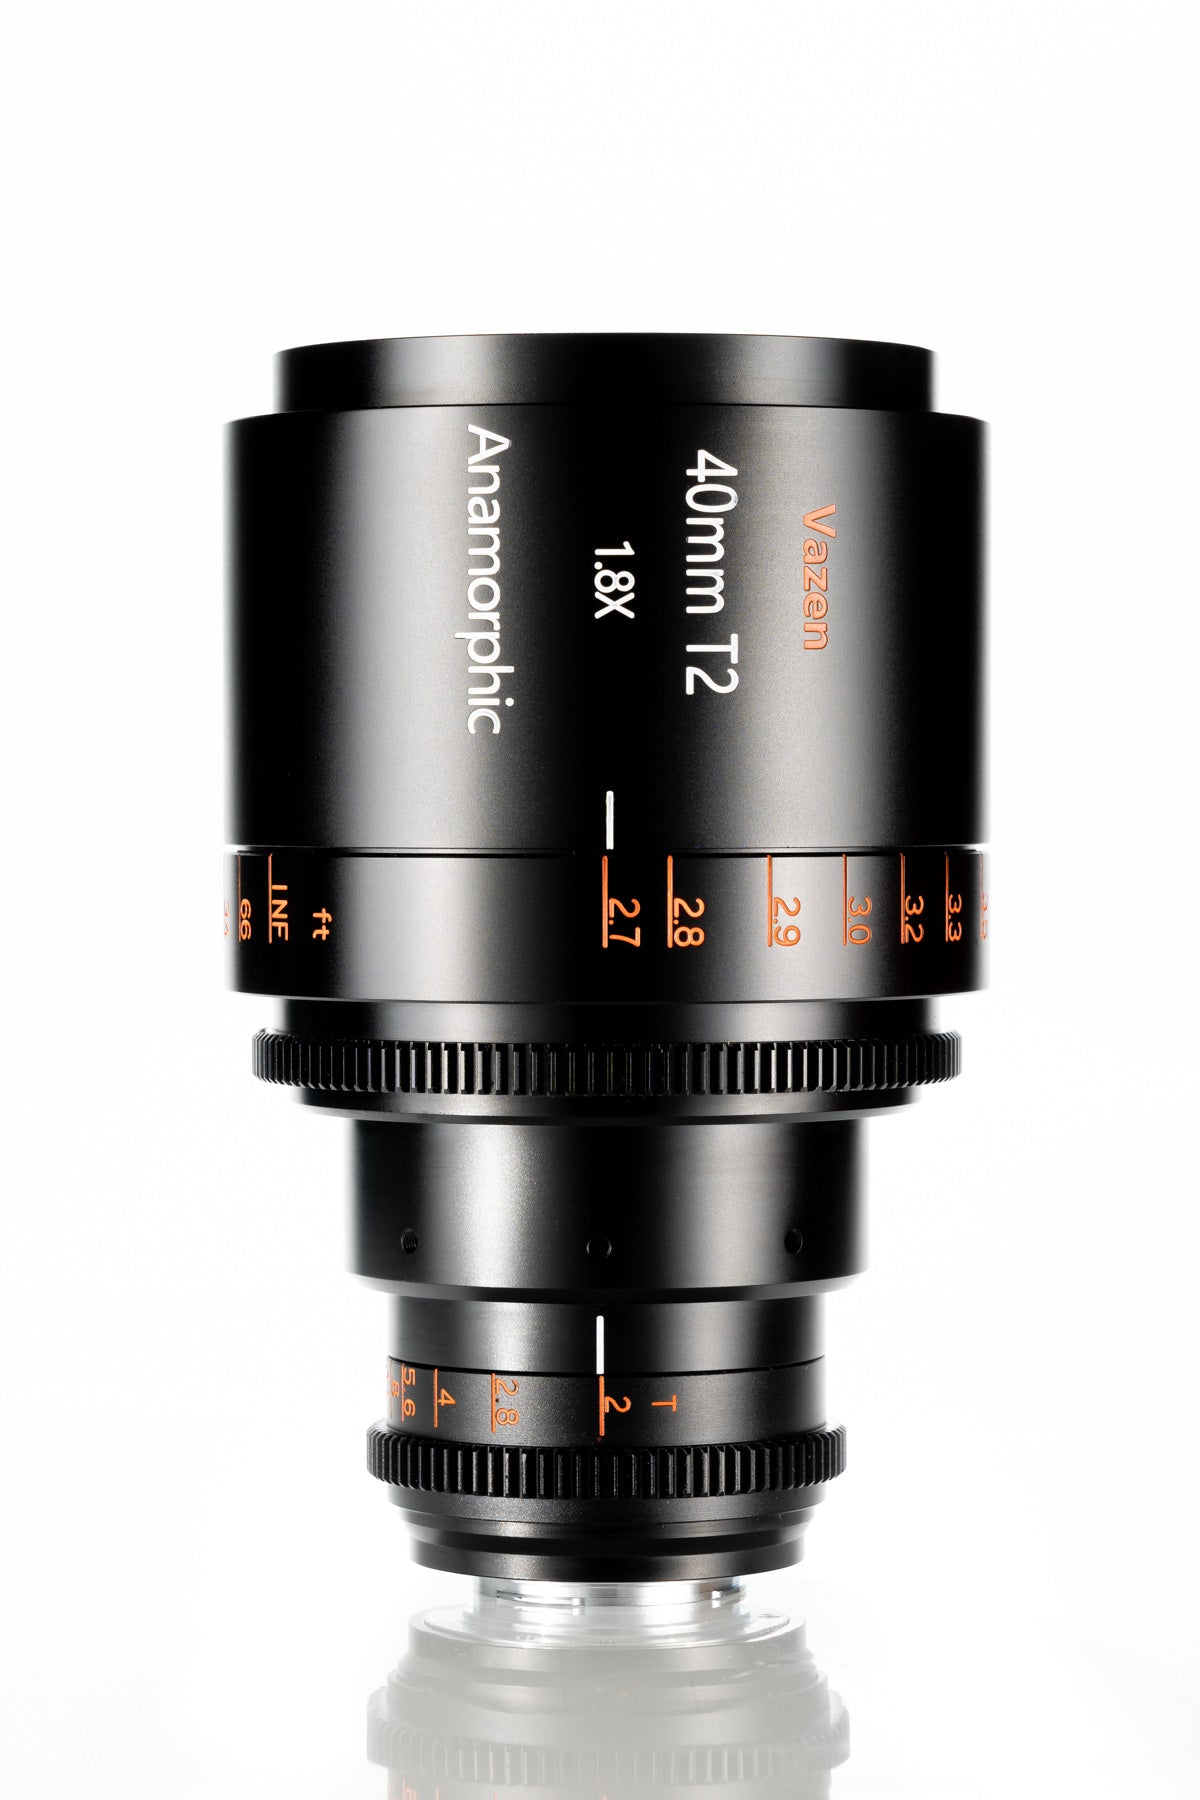 Vazen 40mm T/2 1.8X Anamorphic Lens for MFT Camera